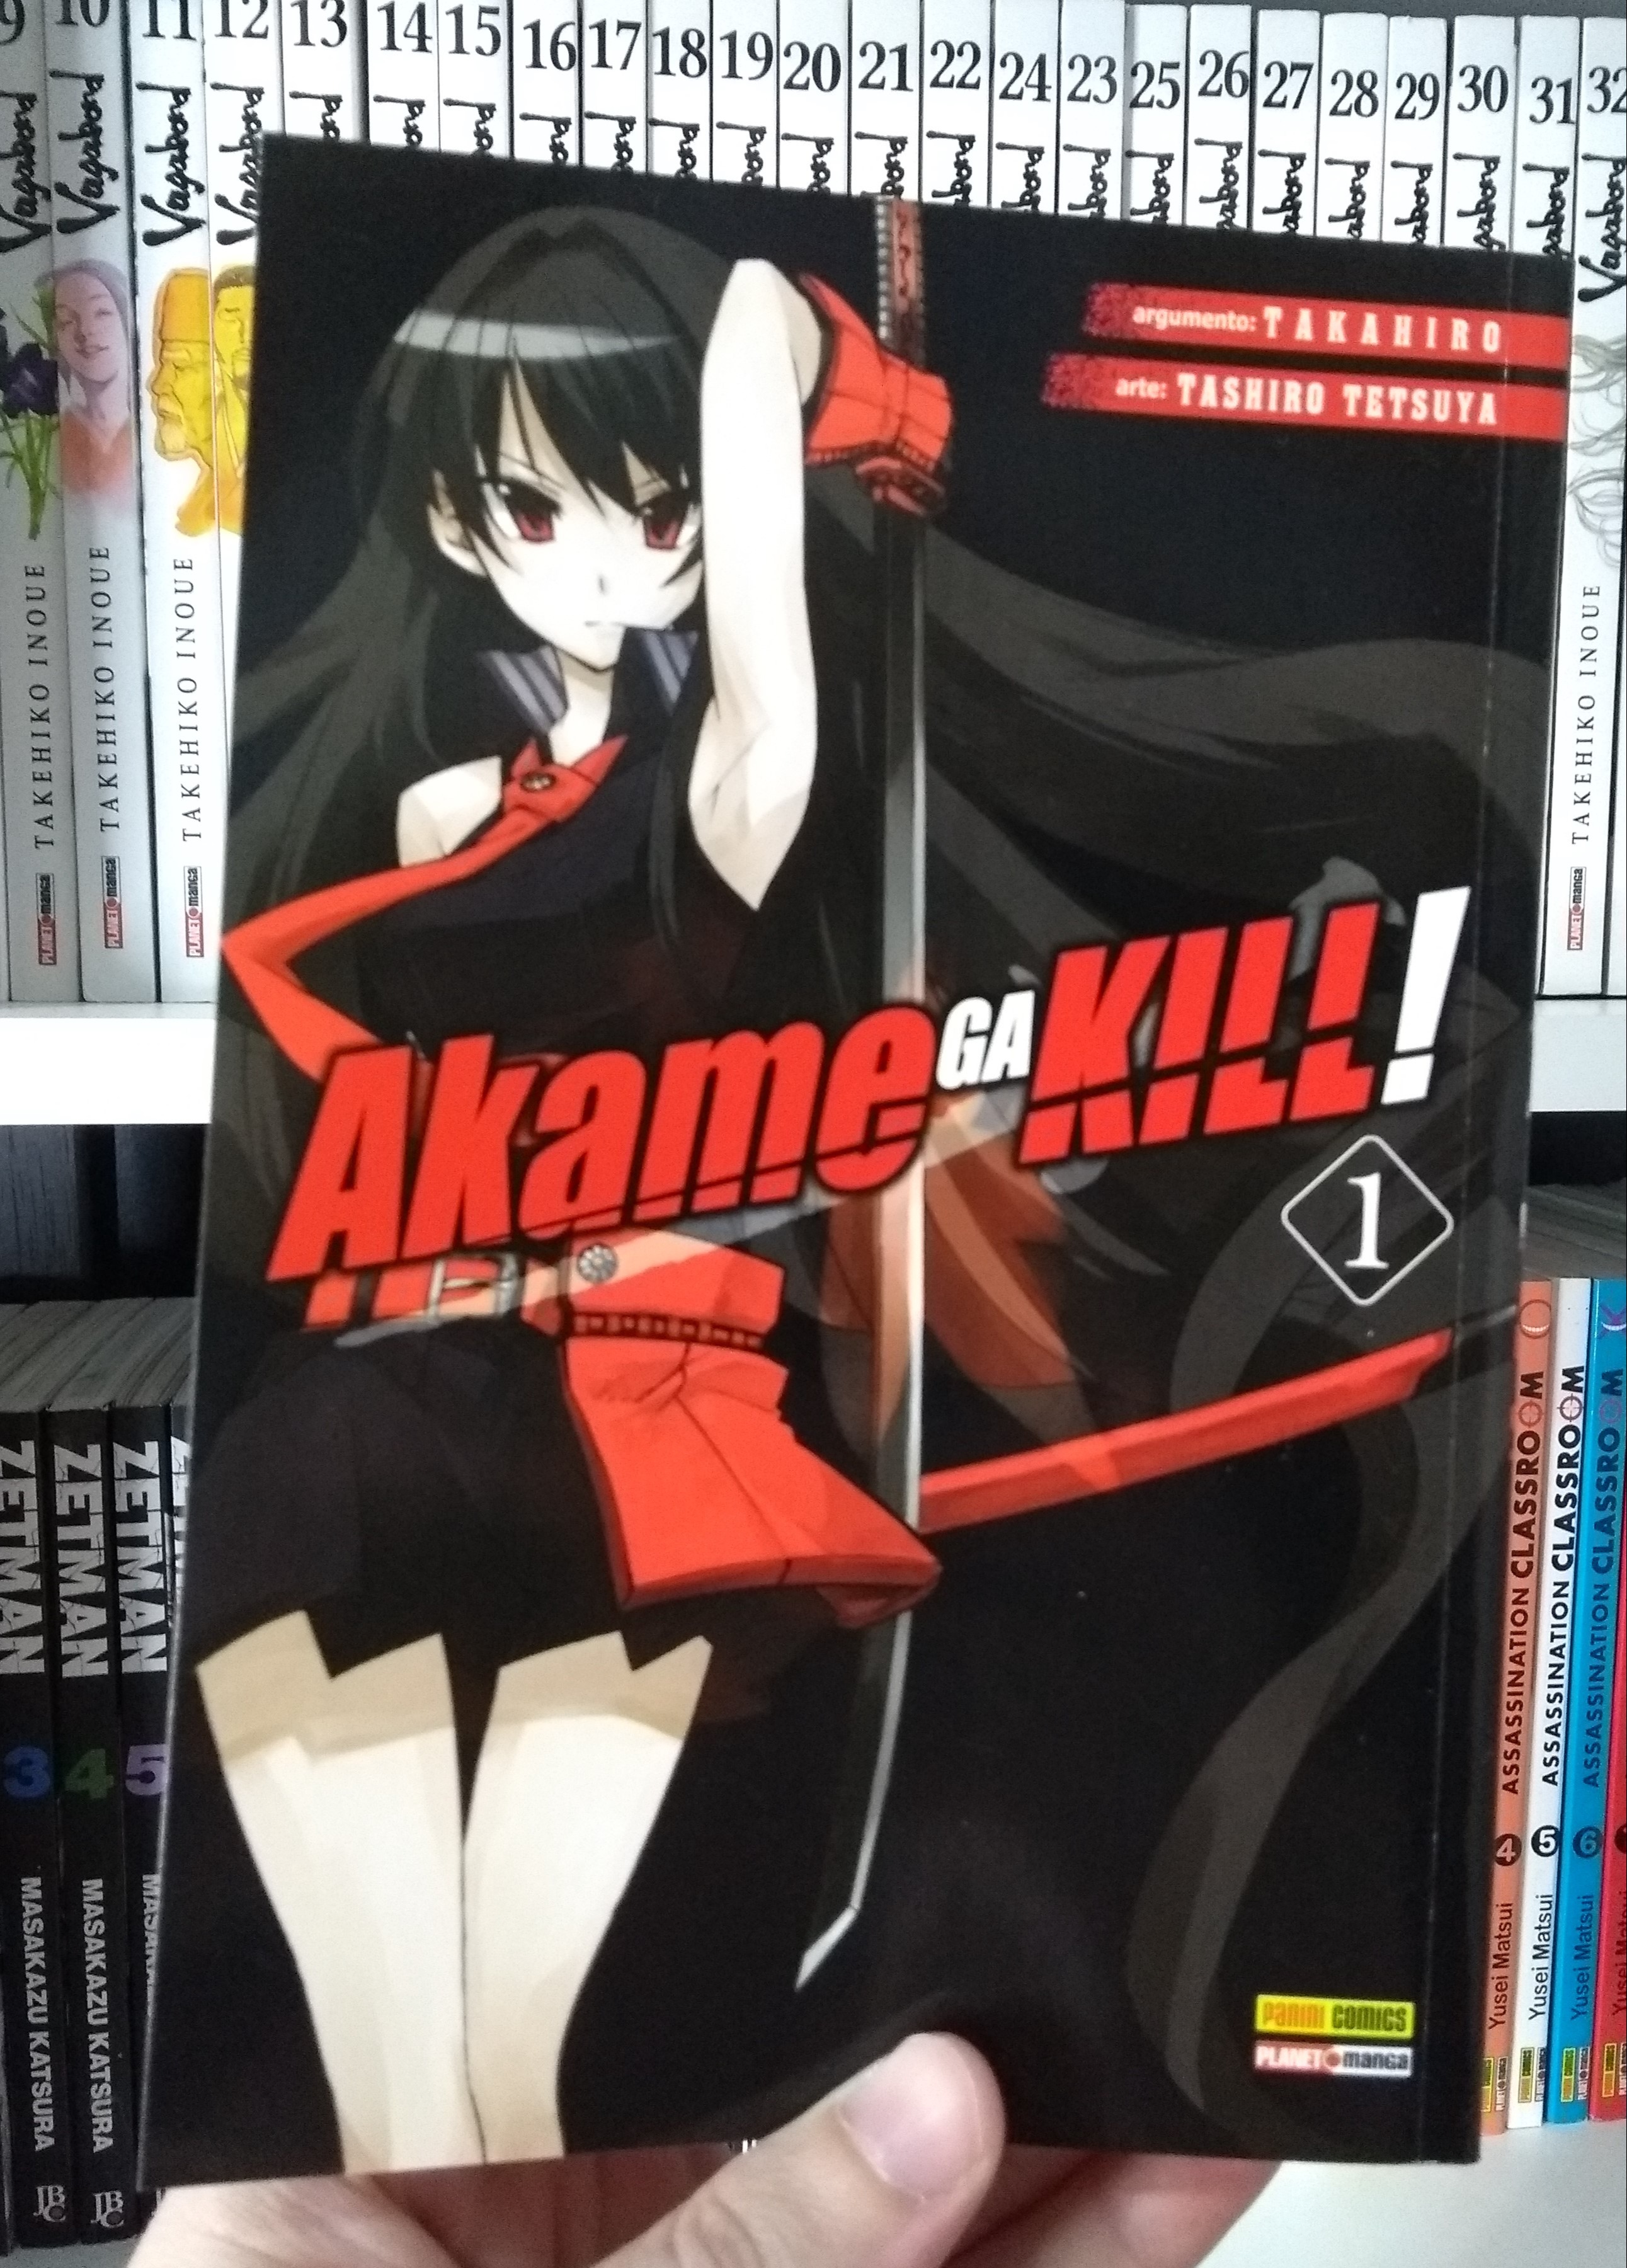 Mangá Akame Ga Kill! Volume 8 - Novo E Lacrado